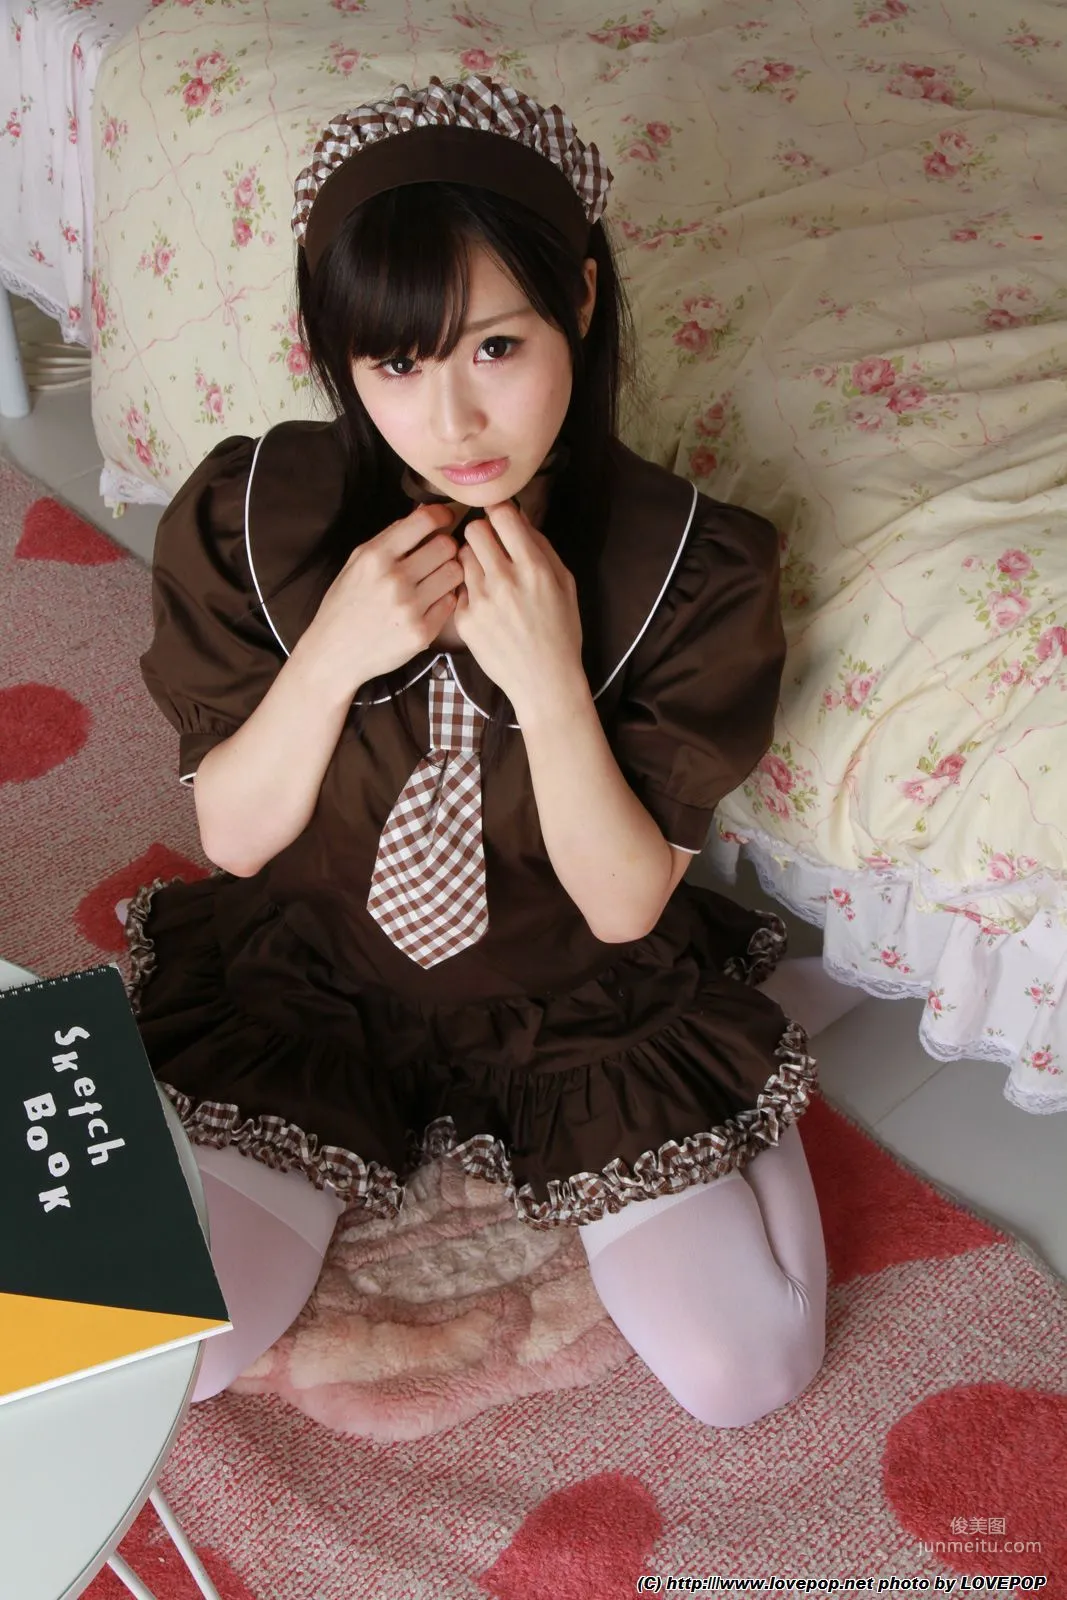 [LOVEPOP] Megumi Aisaka 逢坂愛 Photoset 01 写真集 高清大图在线浏览 - 新美图录